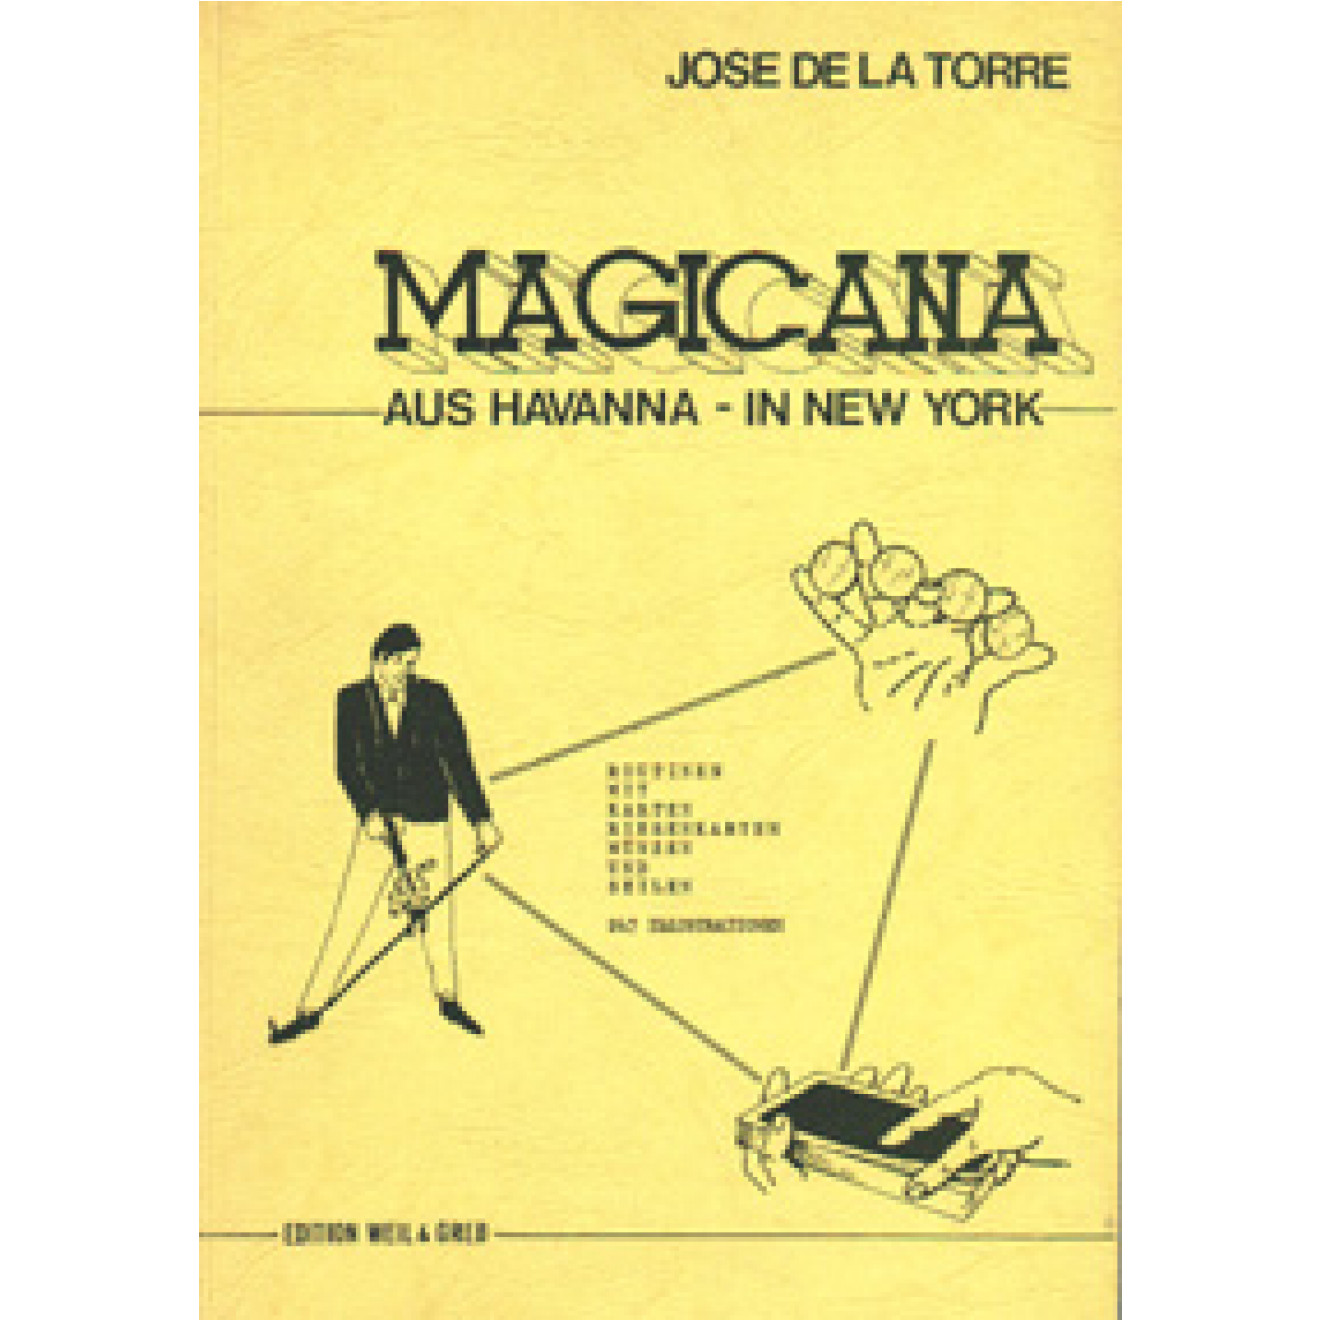 Magicana aus Havanna - In New York.